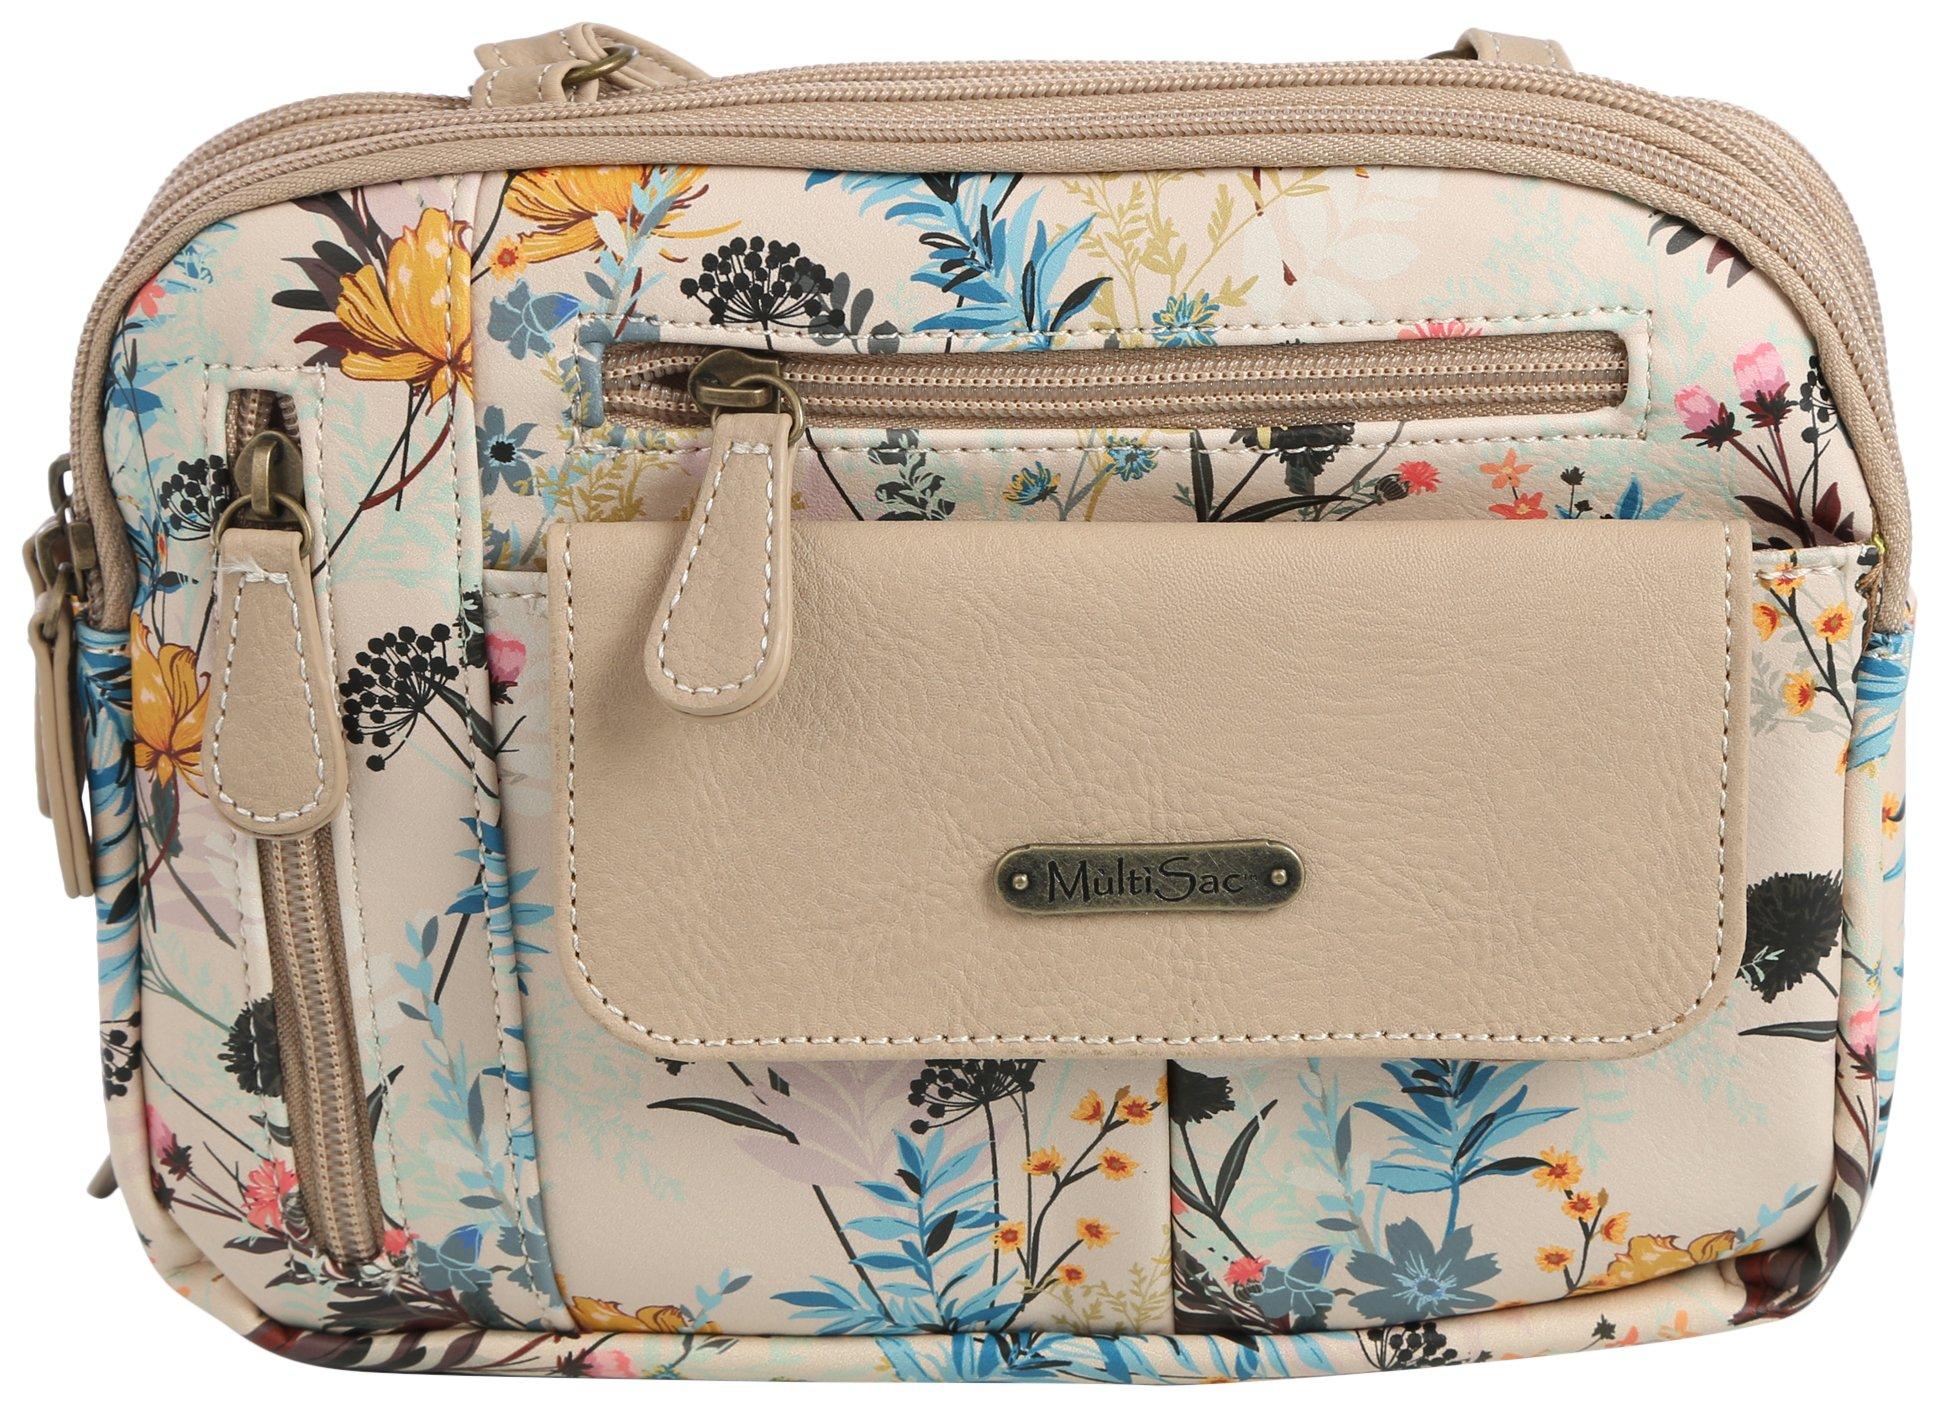 MultiSac Zippy Floral 3-Compartment Shoulder Bag